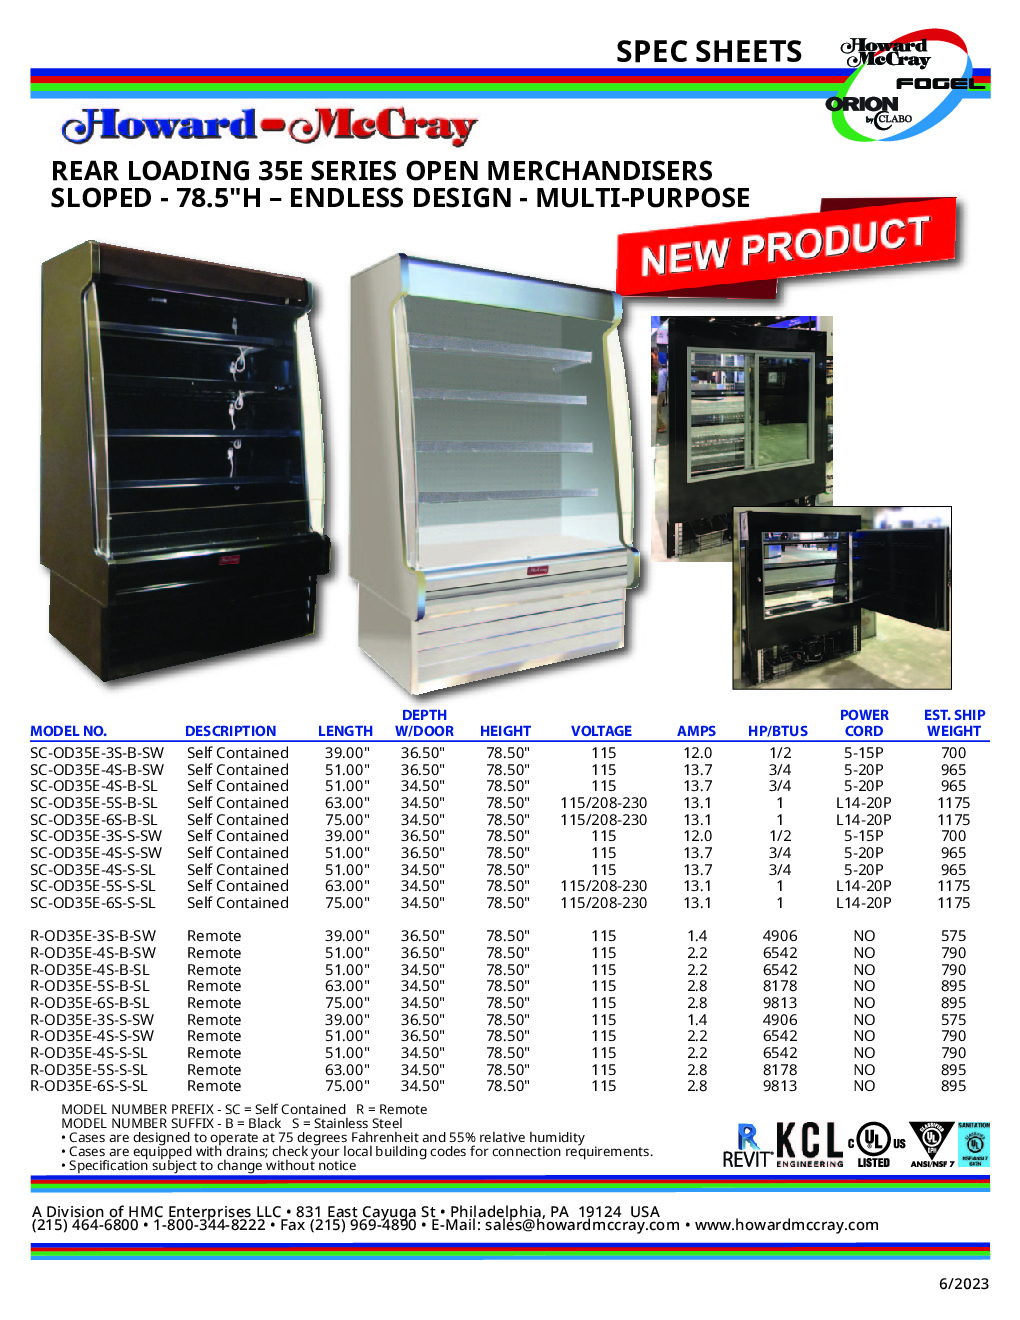 Howard-McCray R-OD35E-6S-B-SL Open Refrigerated Display Merchandiser